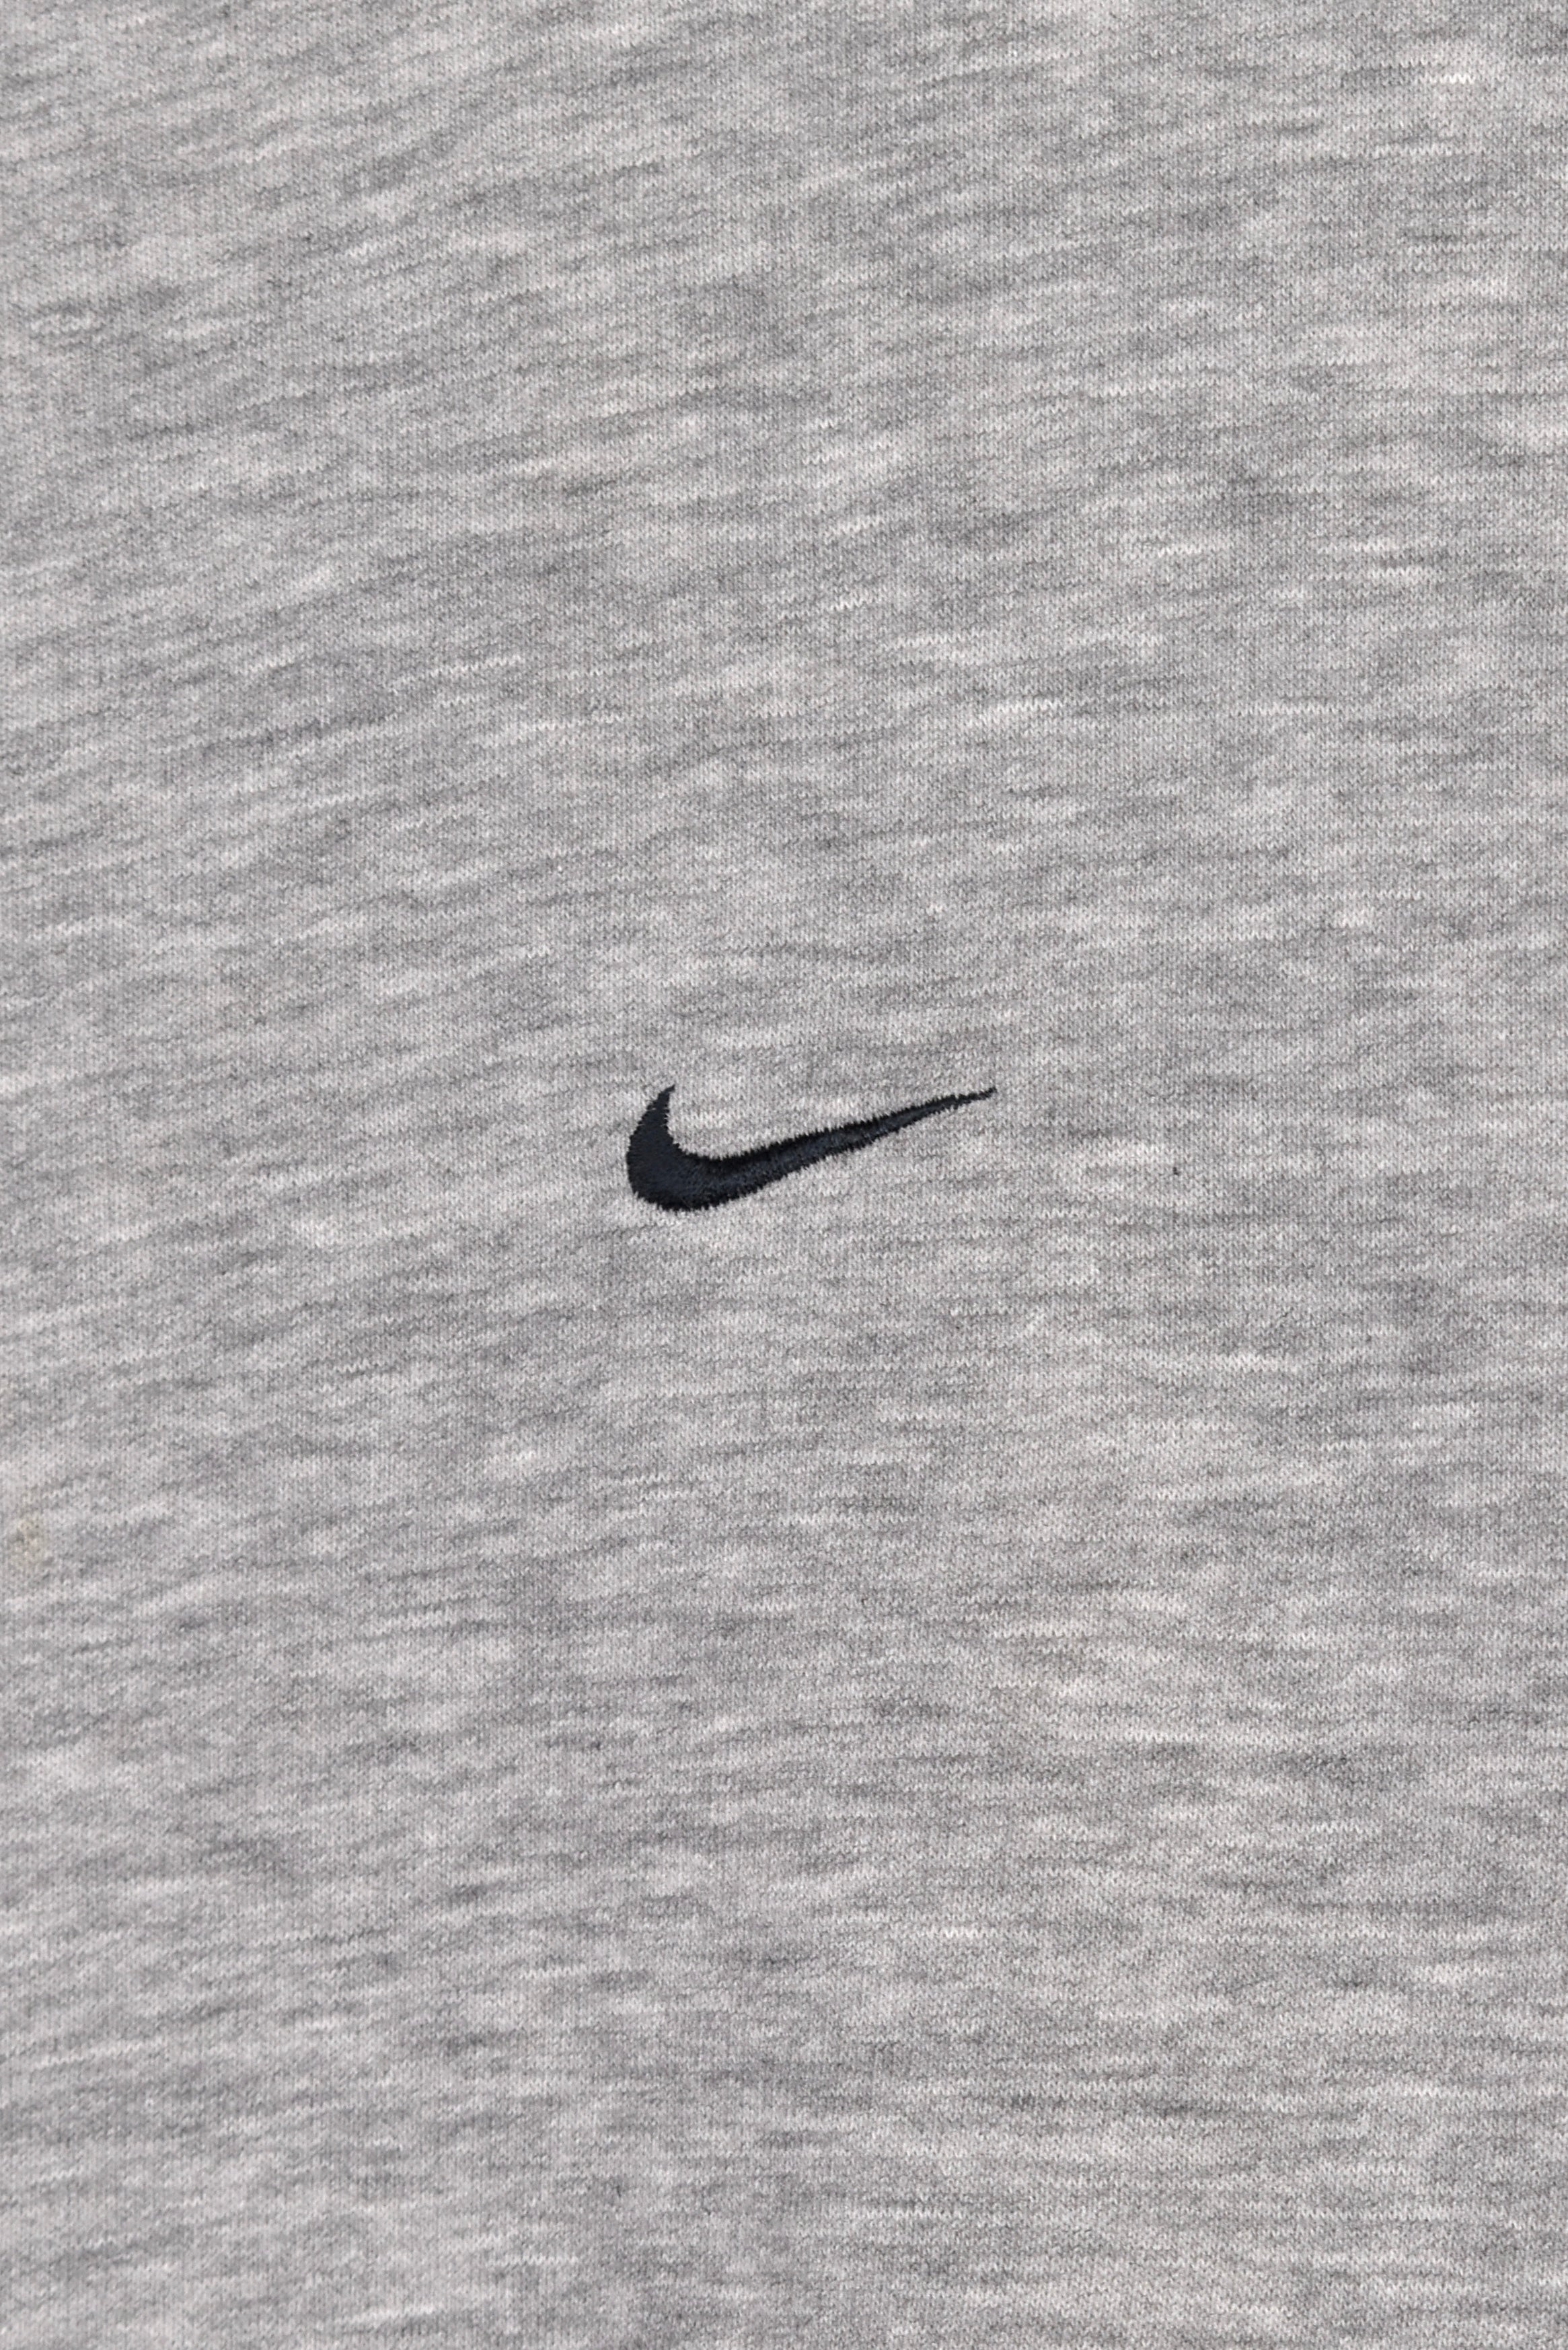 Vintage Nike sweatshirt (XXL), grey embroidered crewneck